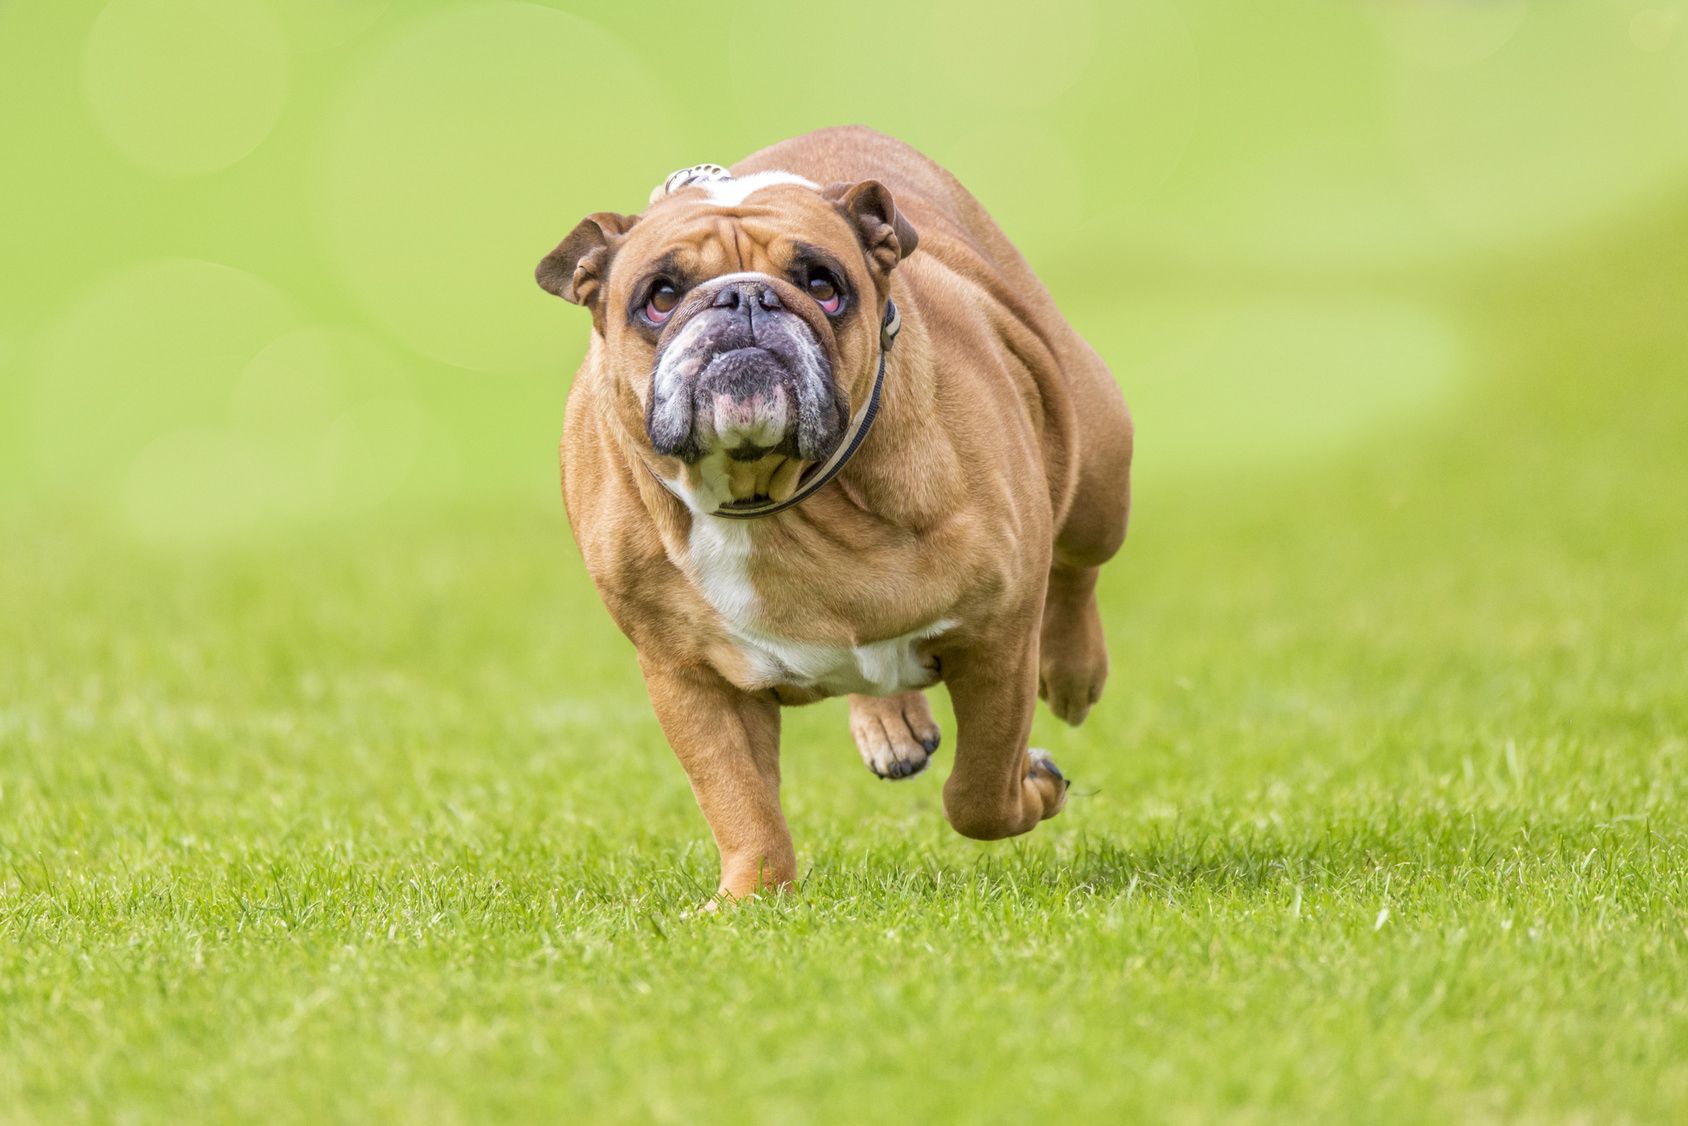 Grumpy looking overweight bulldog runs over the green